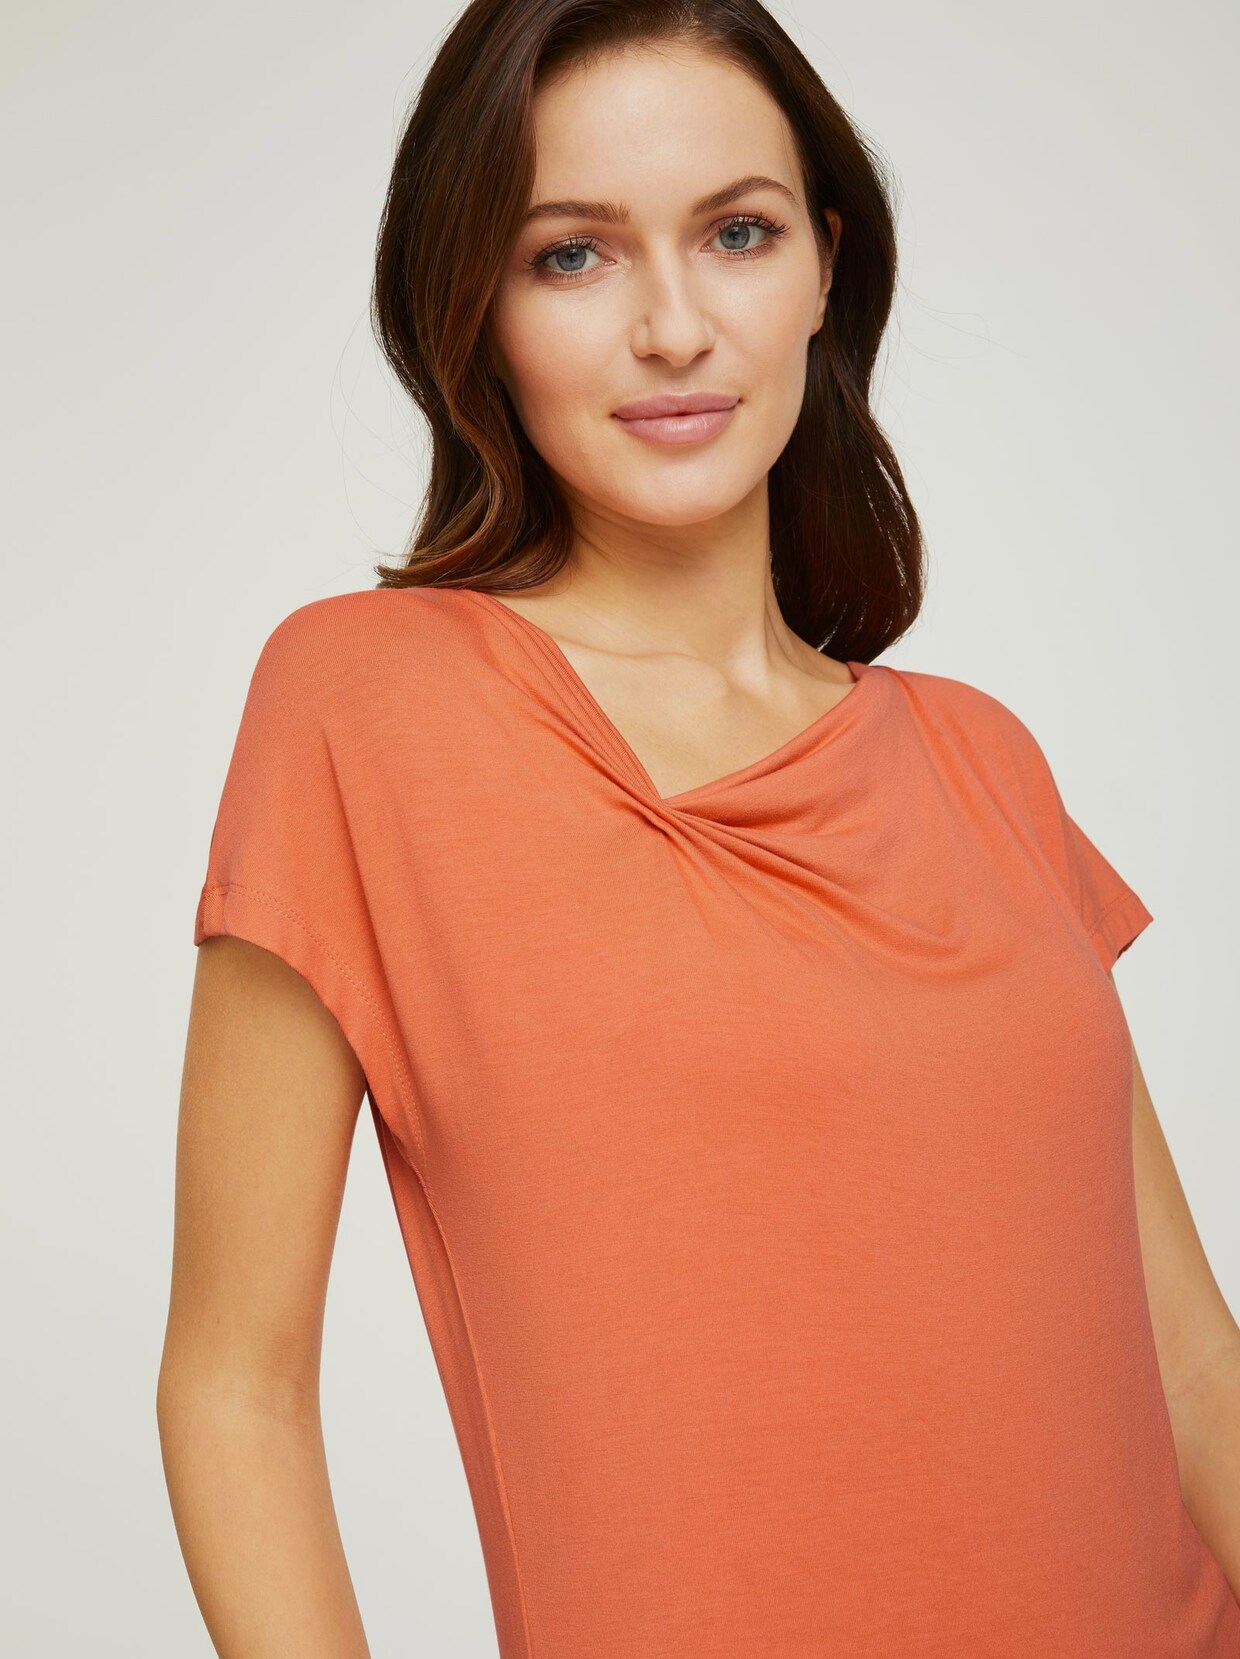 Ashley Brooke Shirt - mandarin